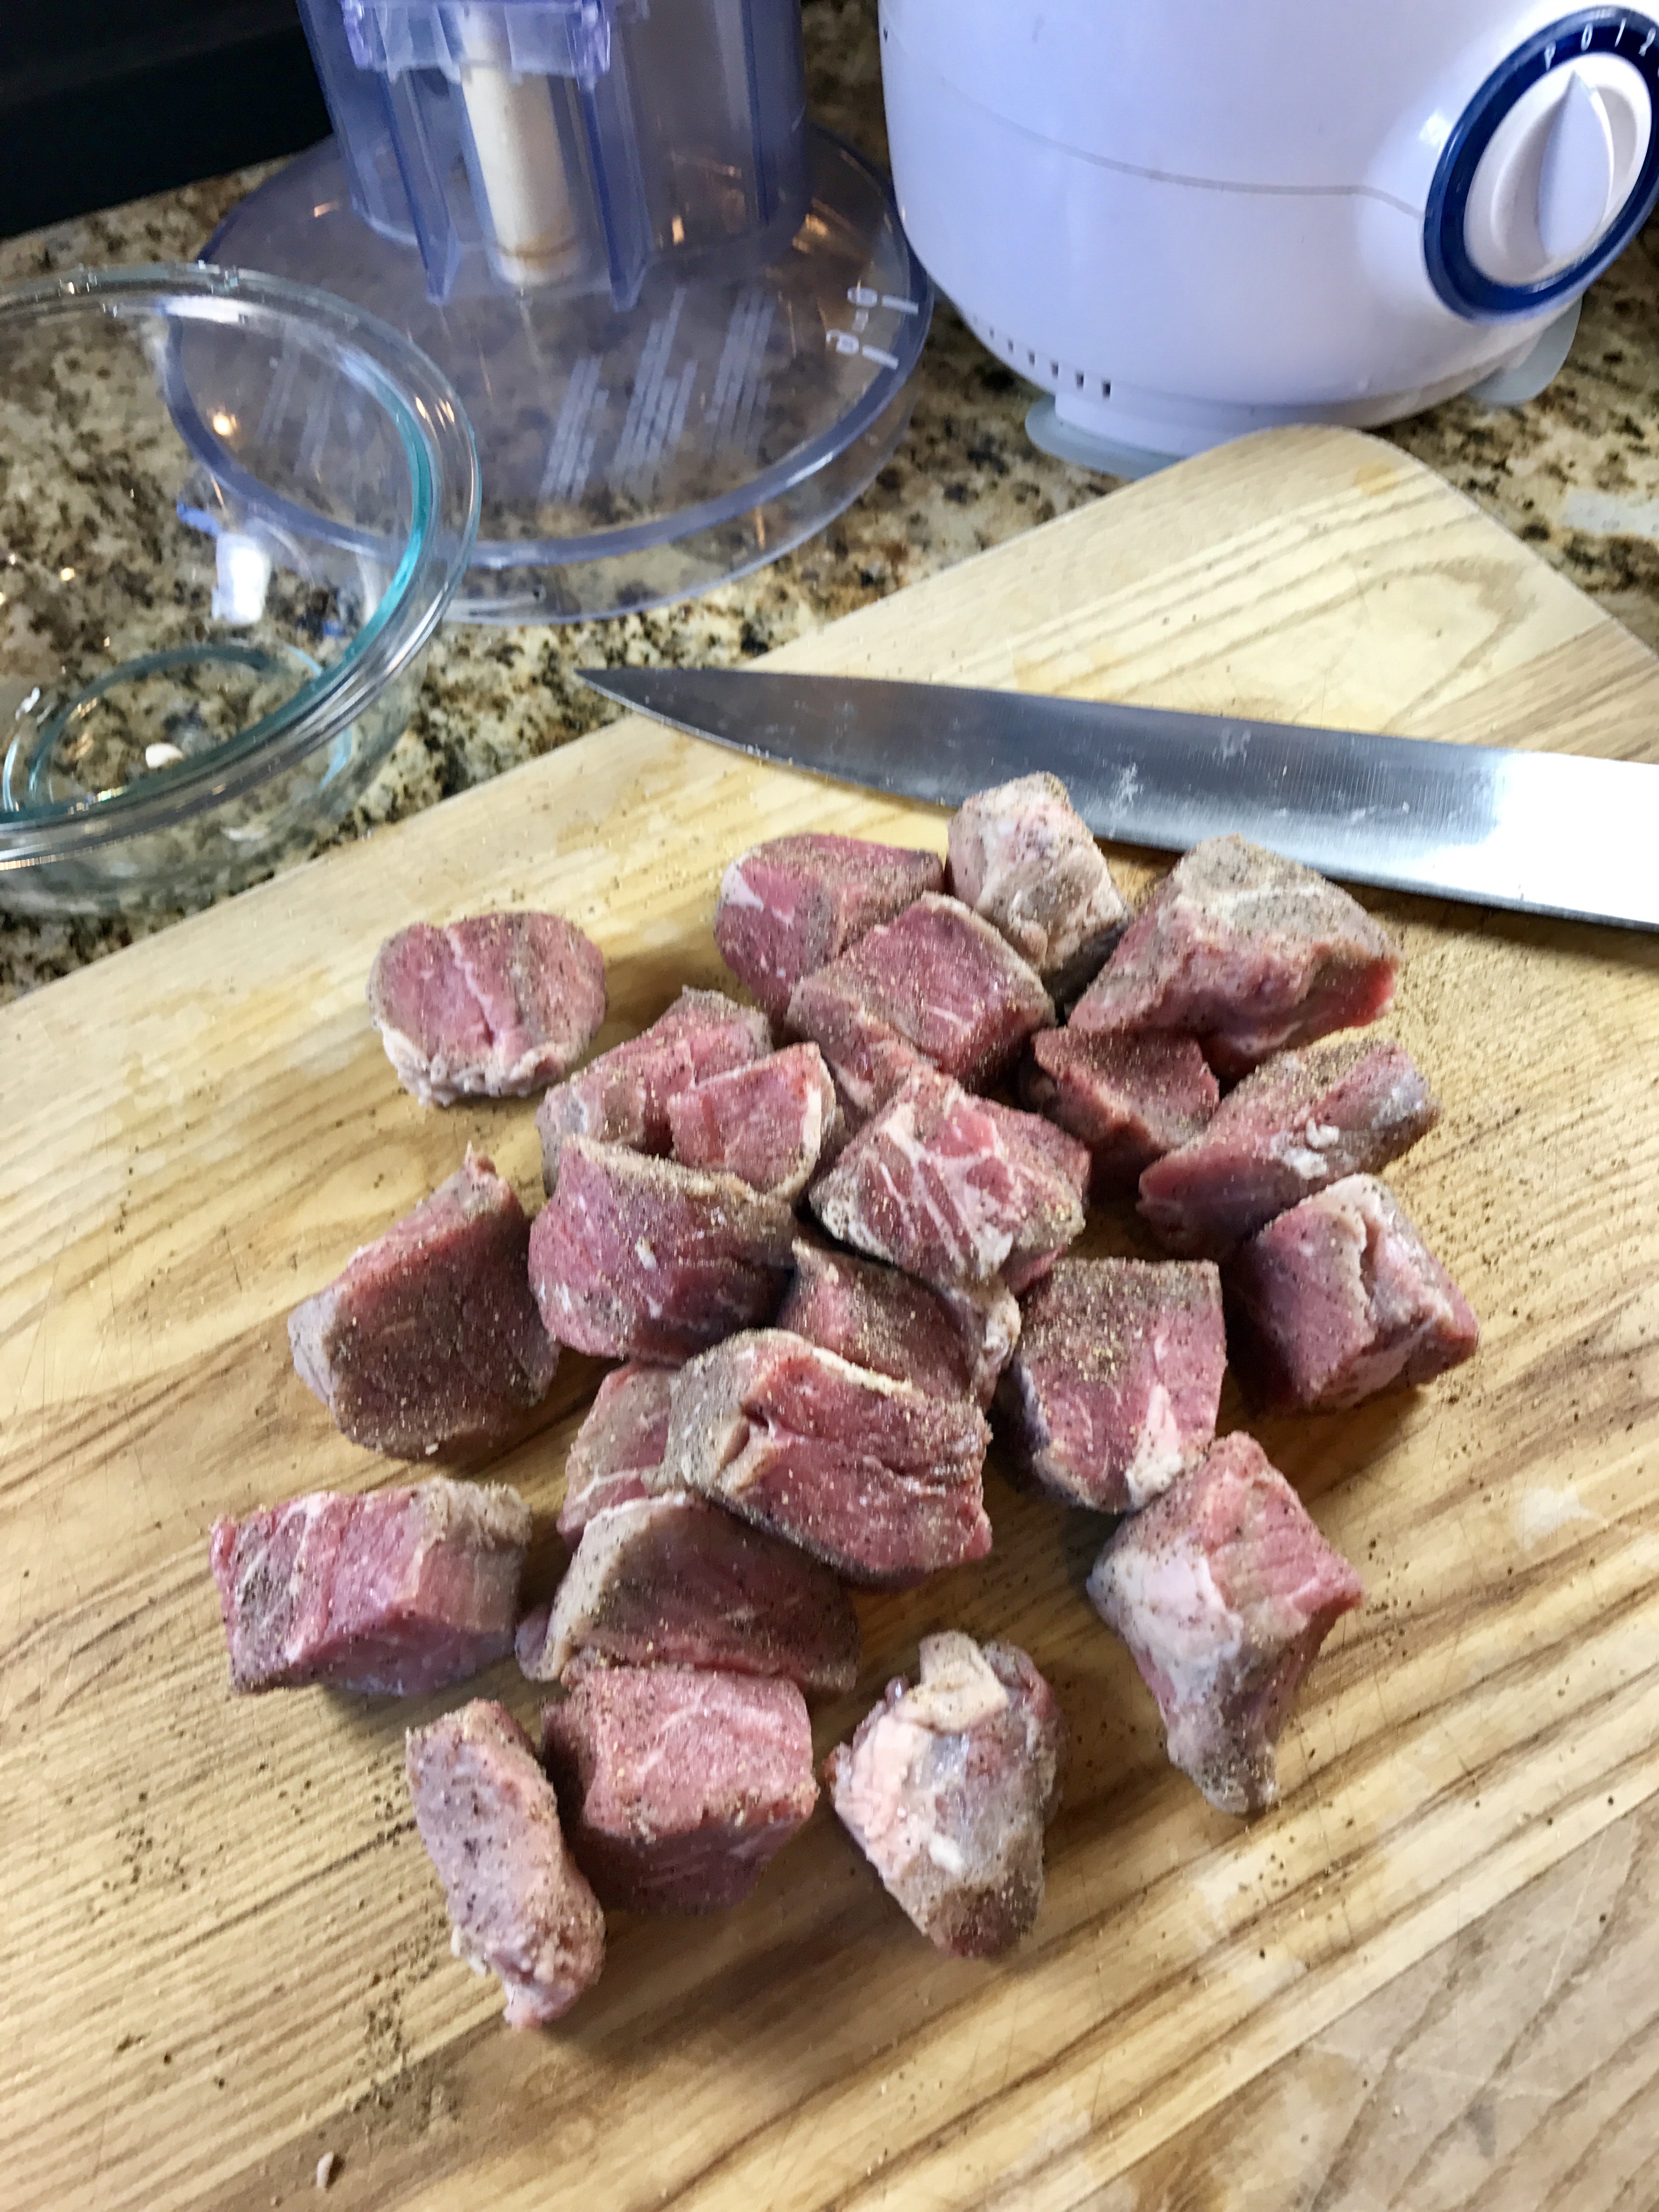 mini-beef-wellington-bites